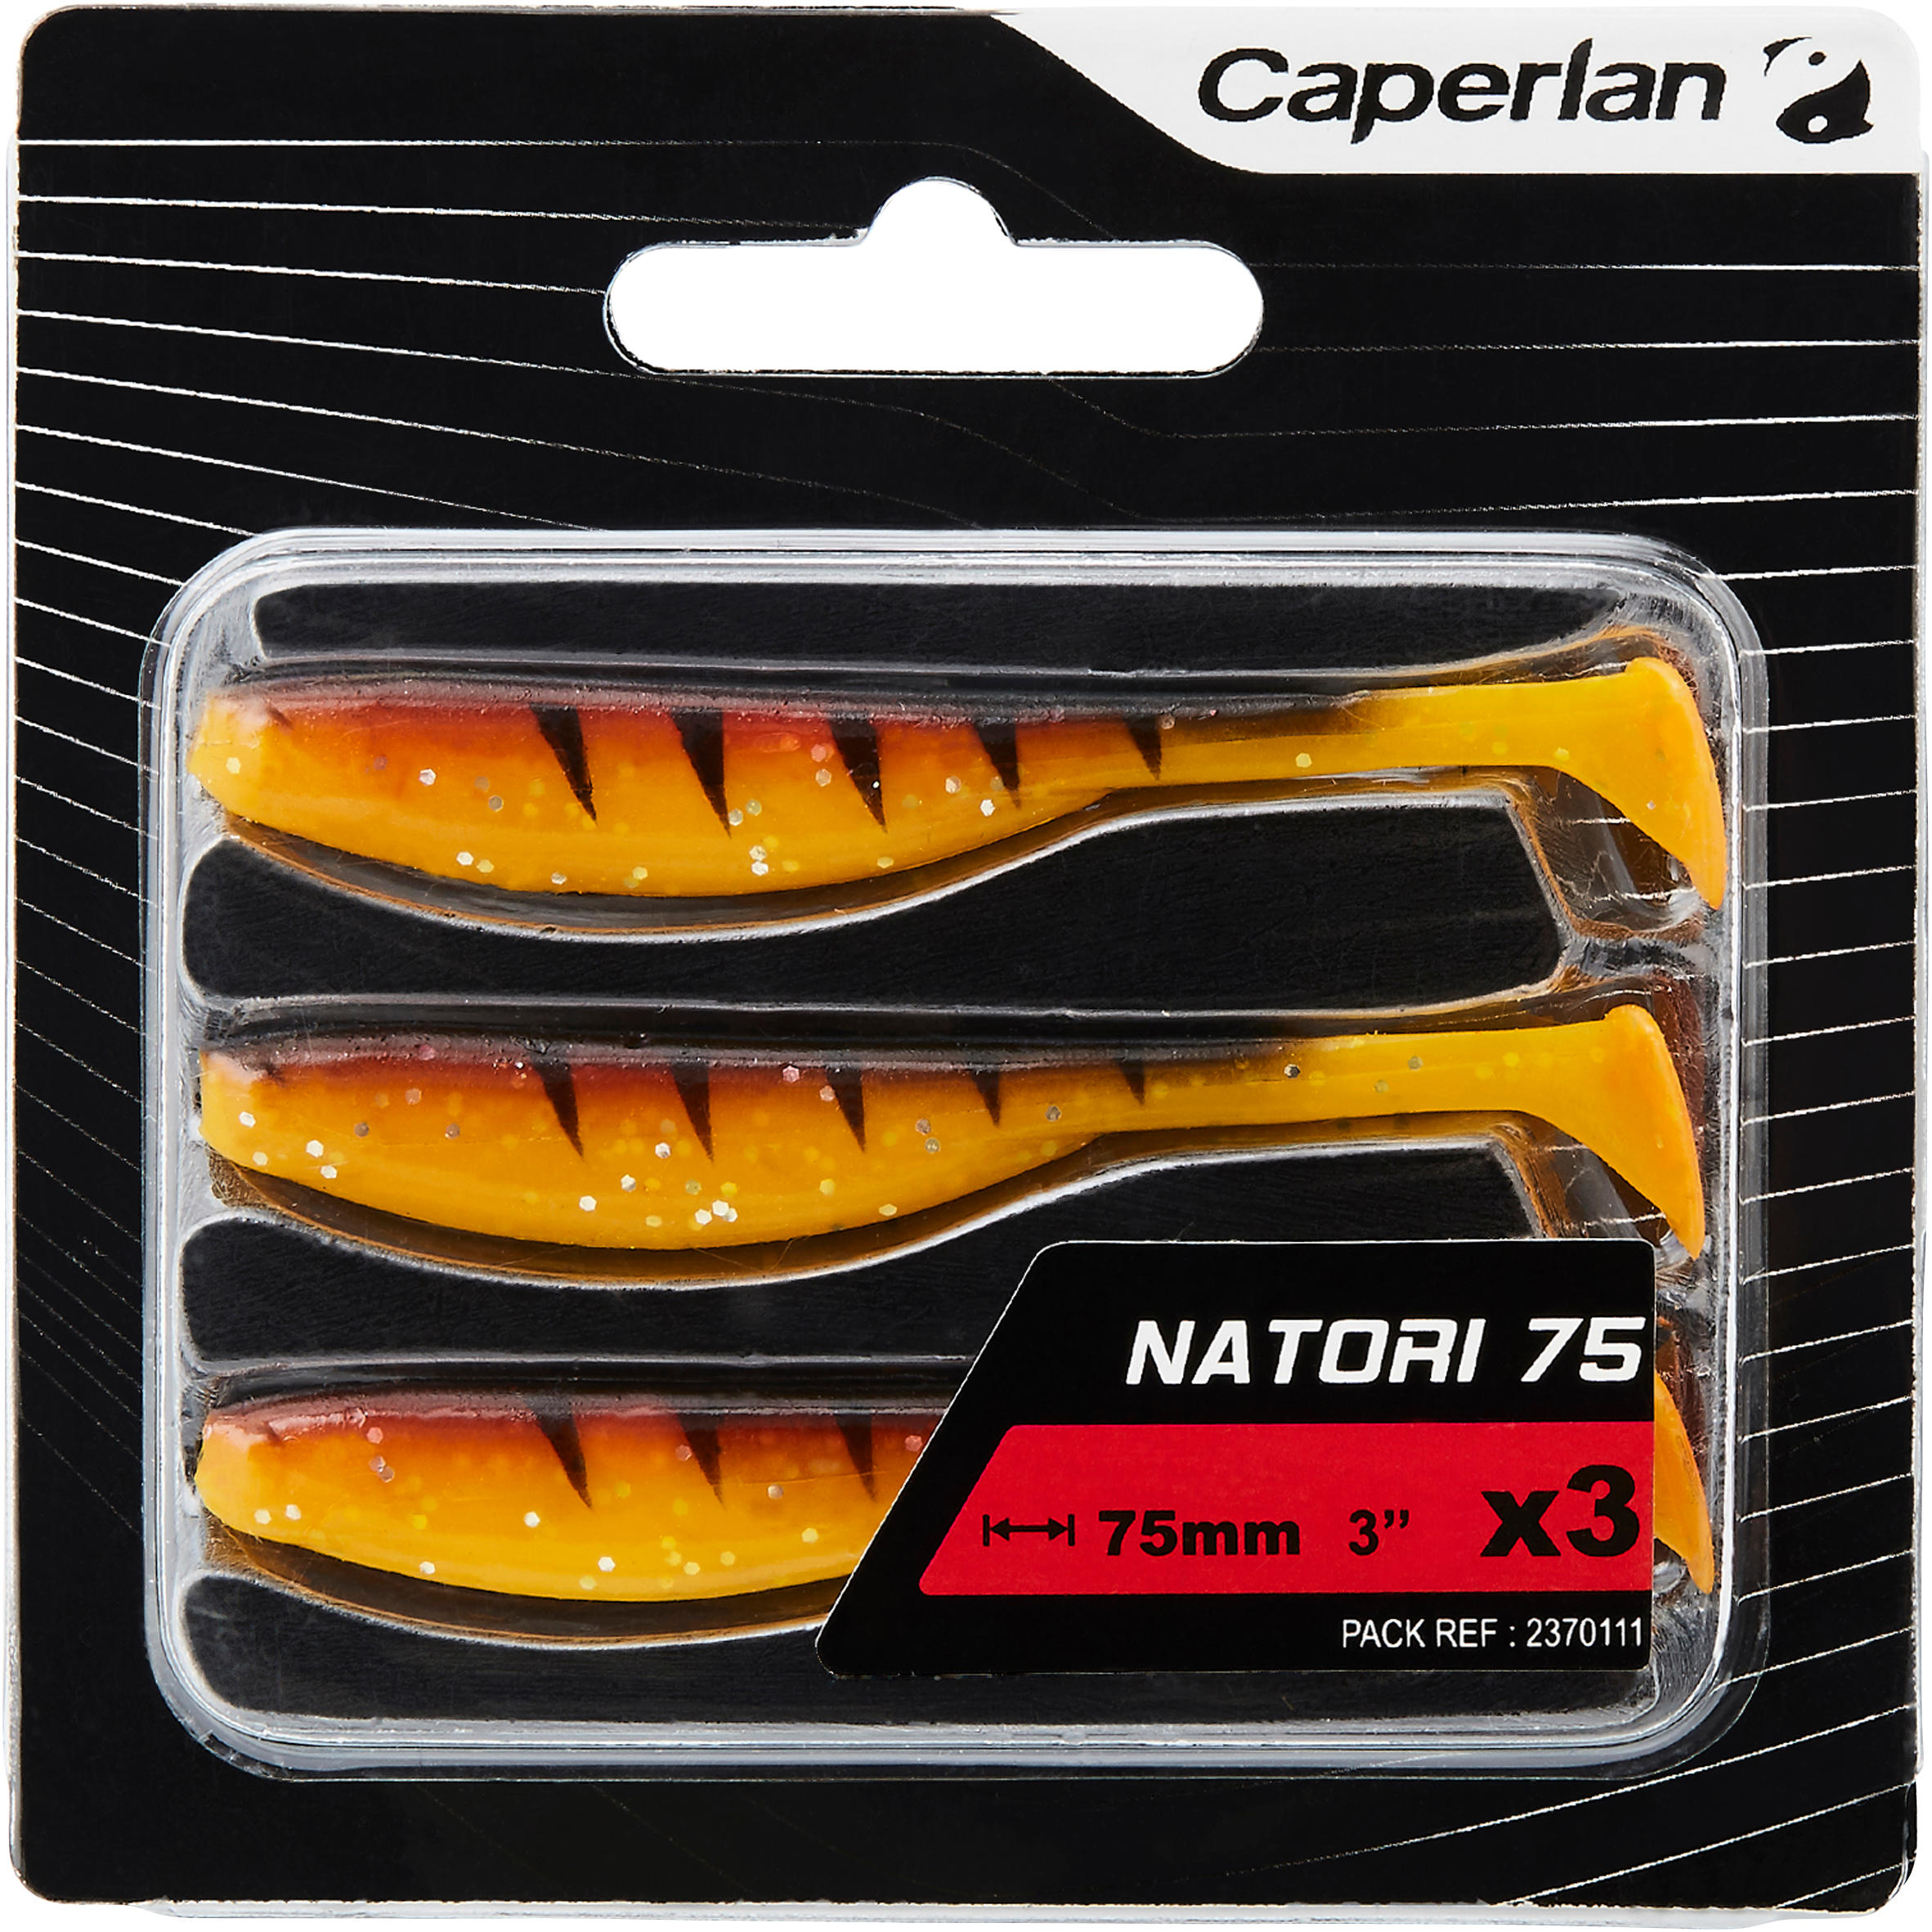 NATORI 75 ORANGE TIGER X3 LURE FISHING SOFT LURE 3/3